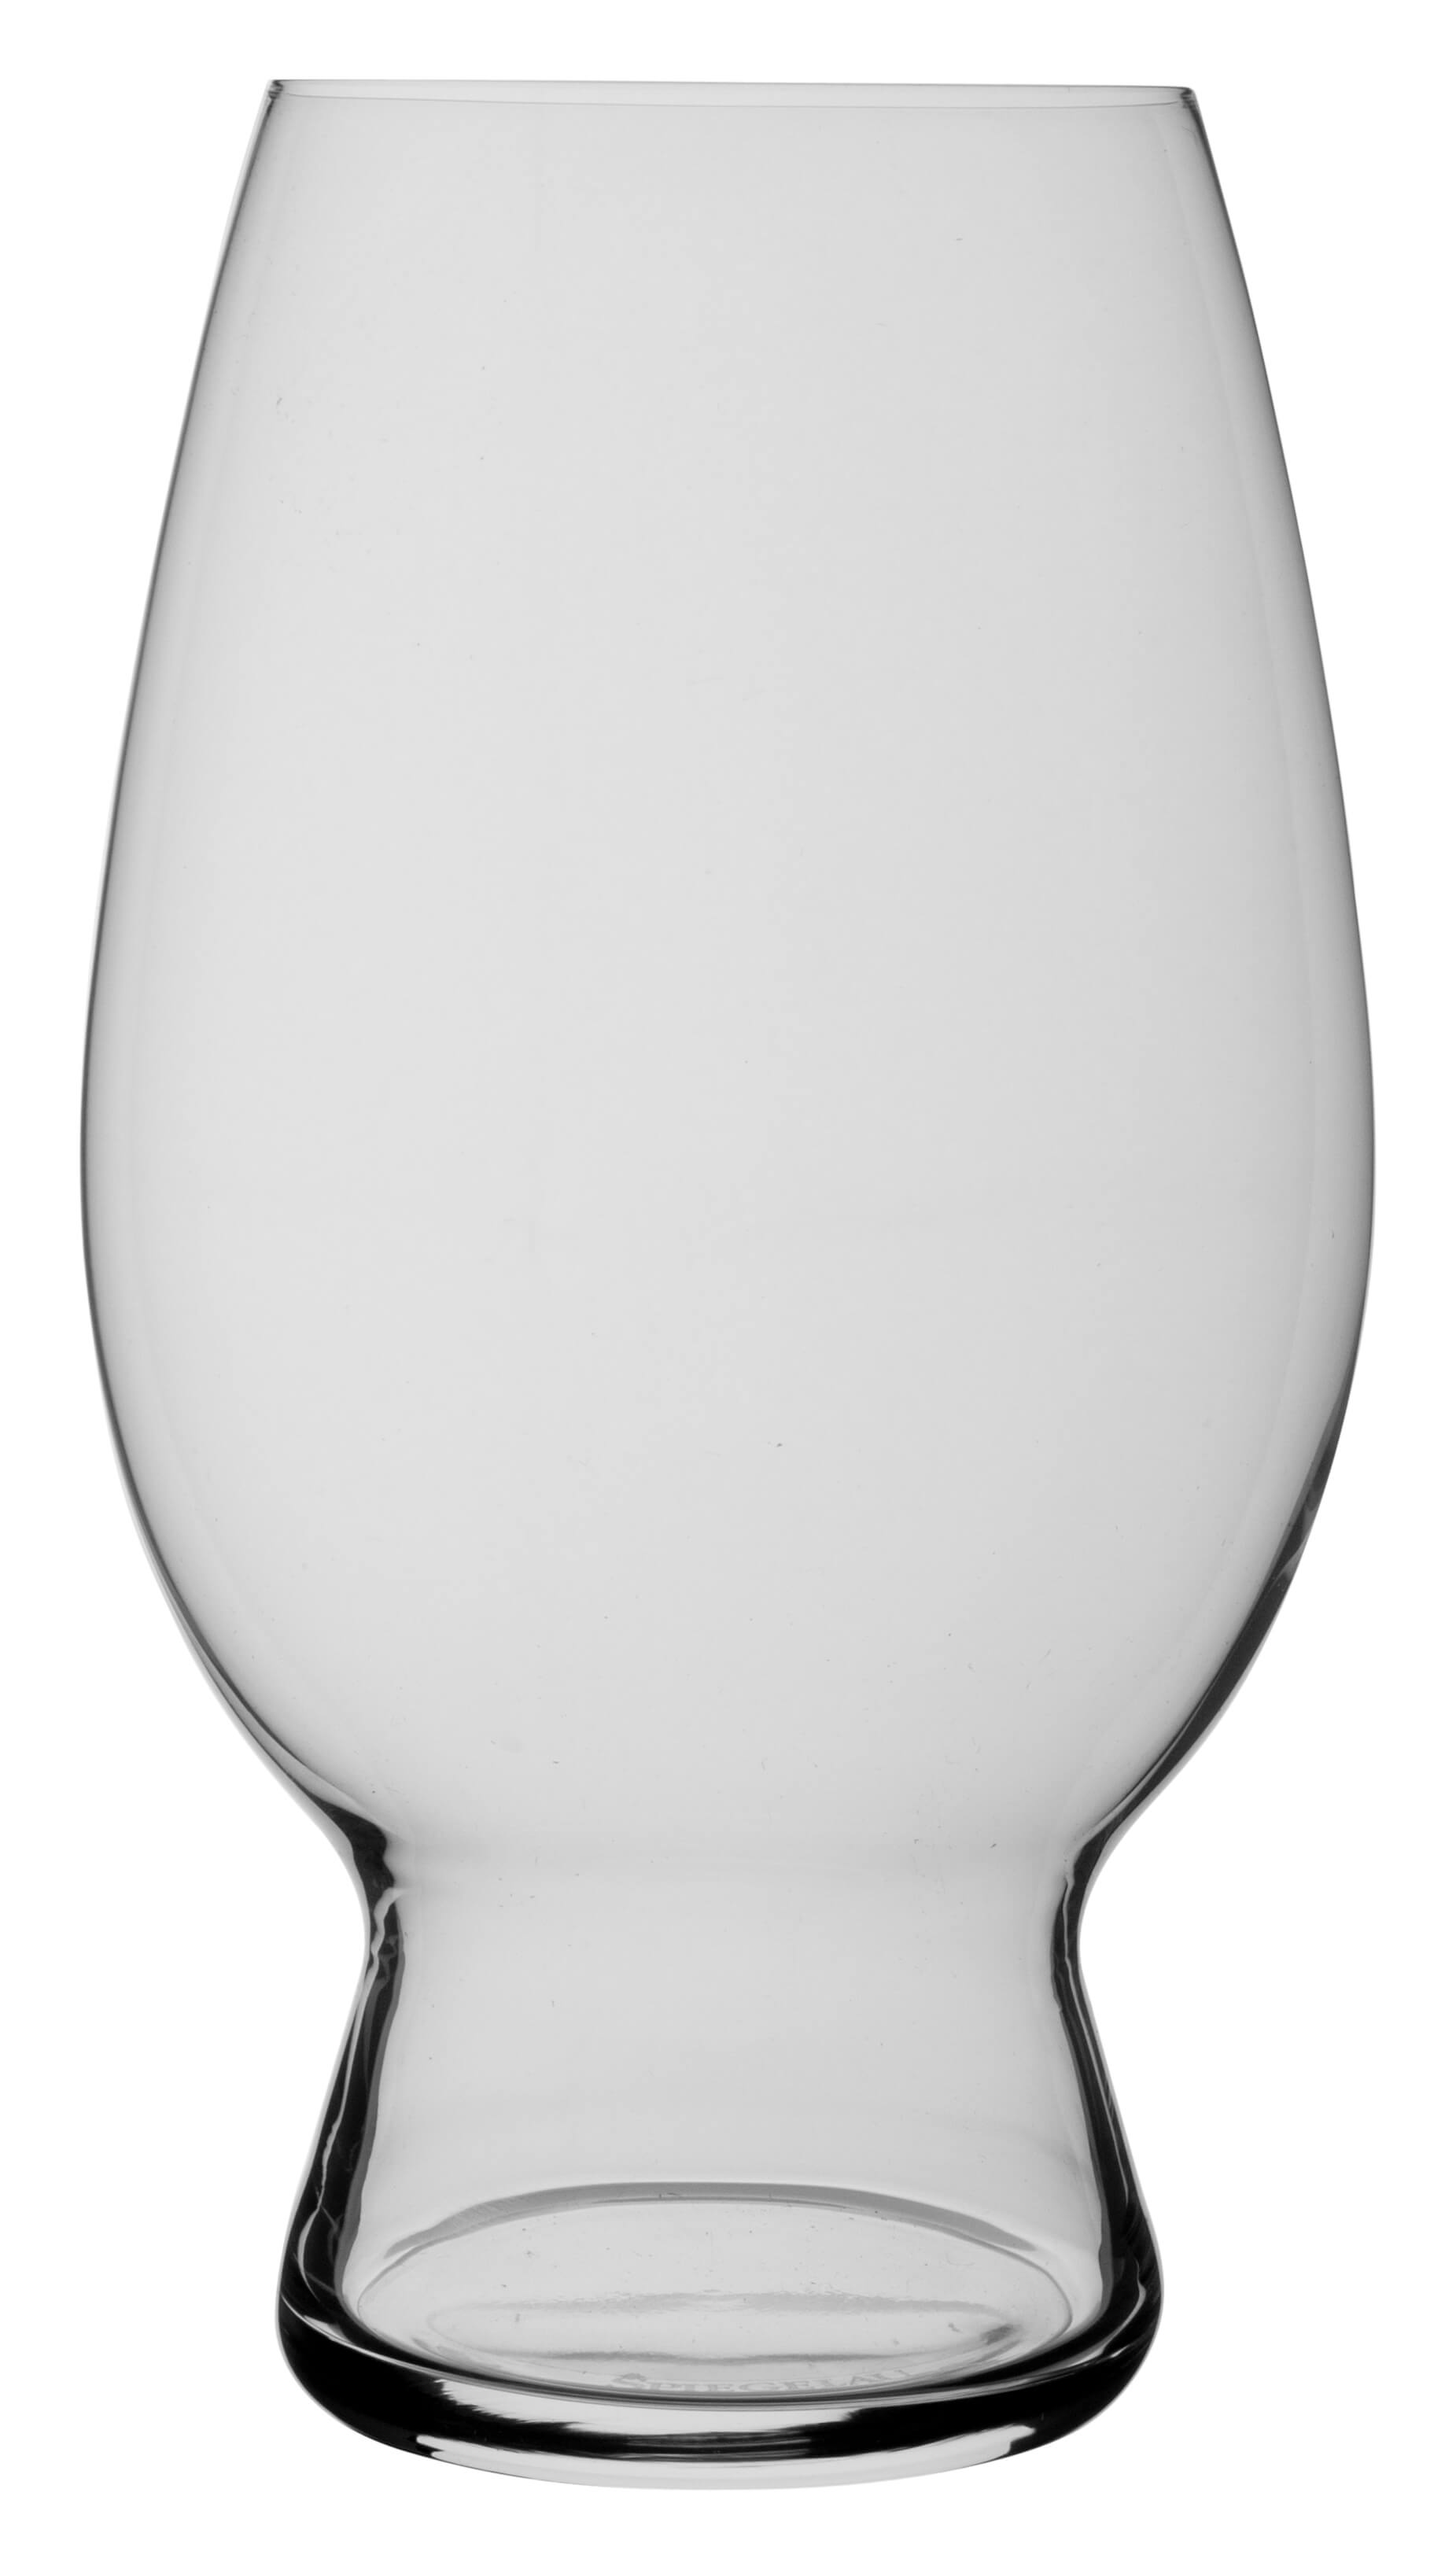 Witbier Glass, Craft Beer Glasses, Spiegelau - 750ml